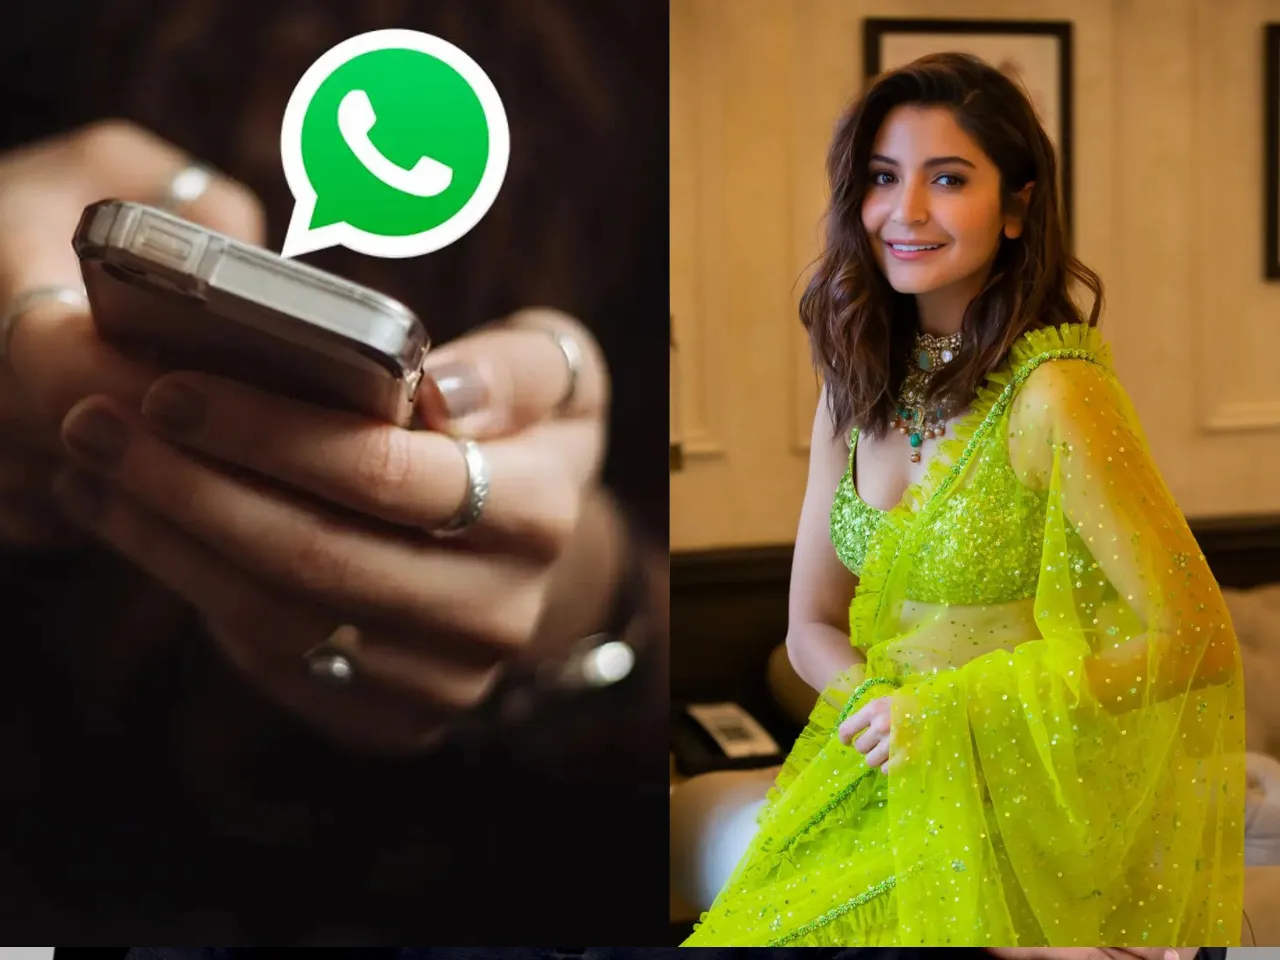 Meta's WhatsApp onboards Anushka Sharma to drive awarness around privacy feature for women